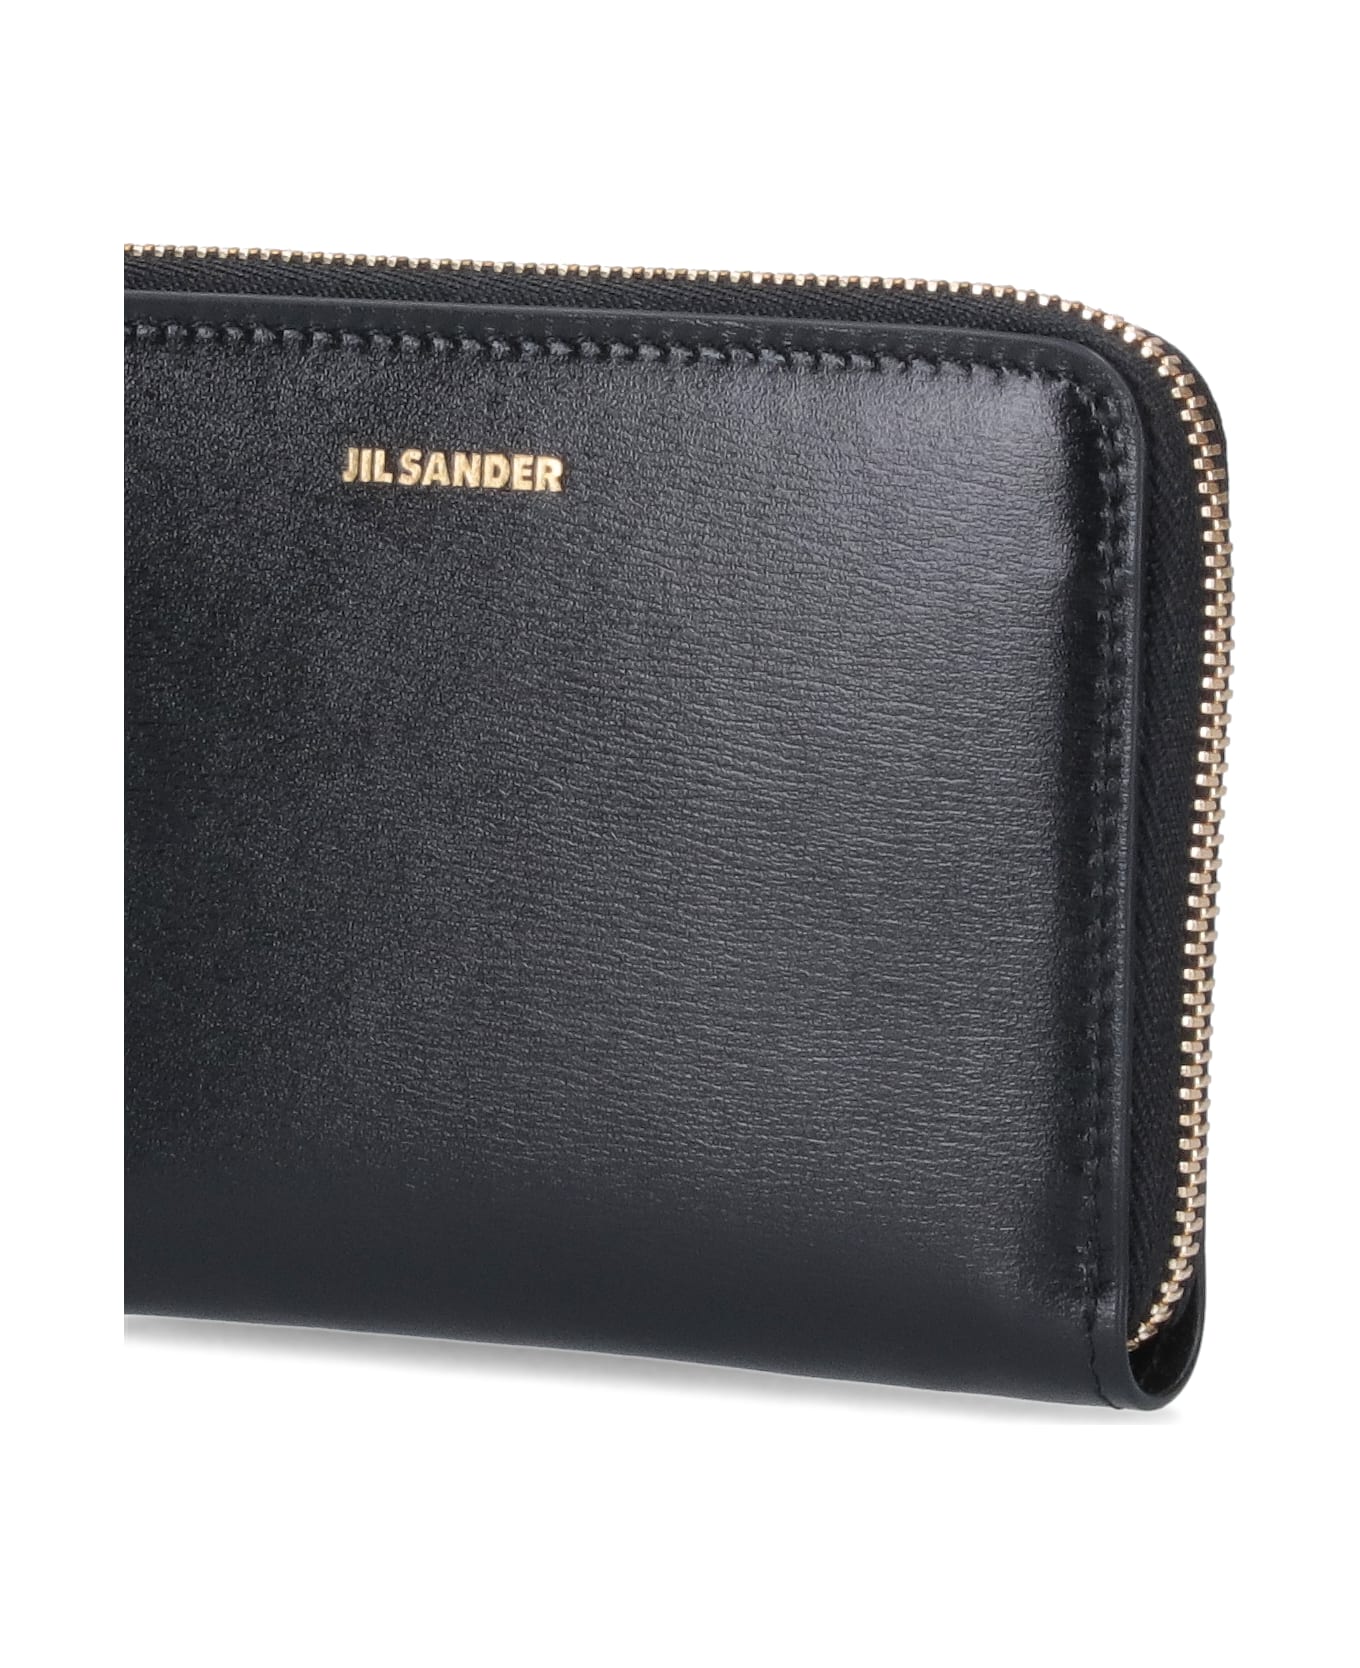 Jil Sander Logo Wallet - Black   財布